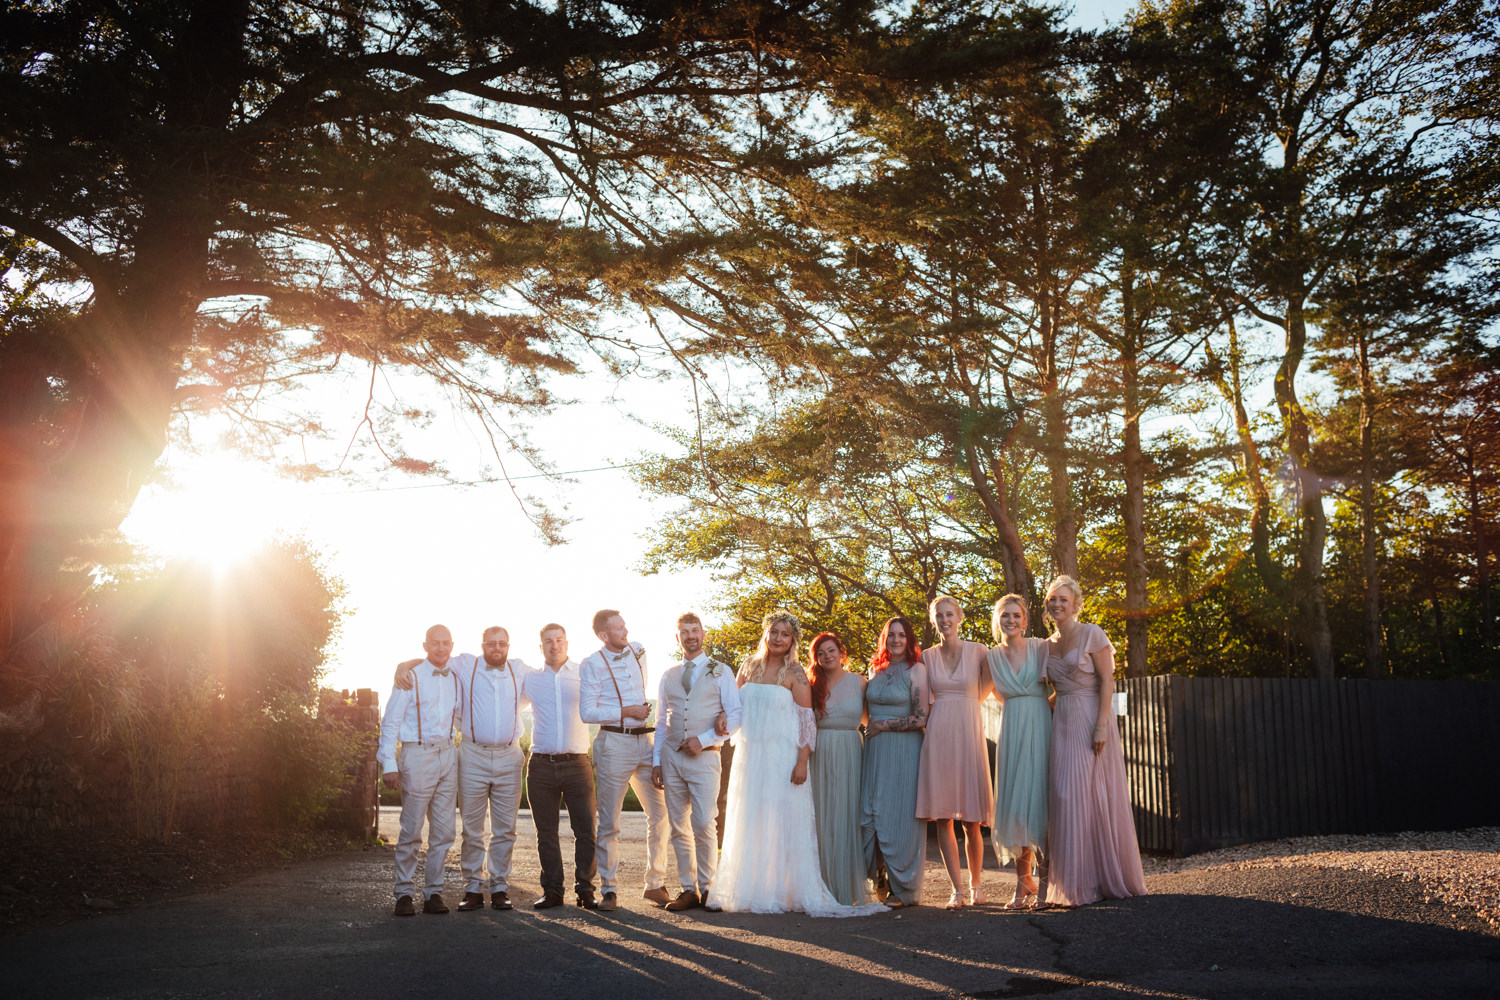 Beaconside House wedding, beach wedding, Documentary wedding photography Devon